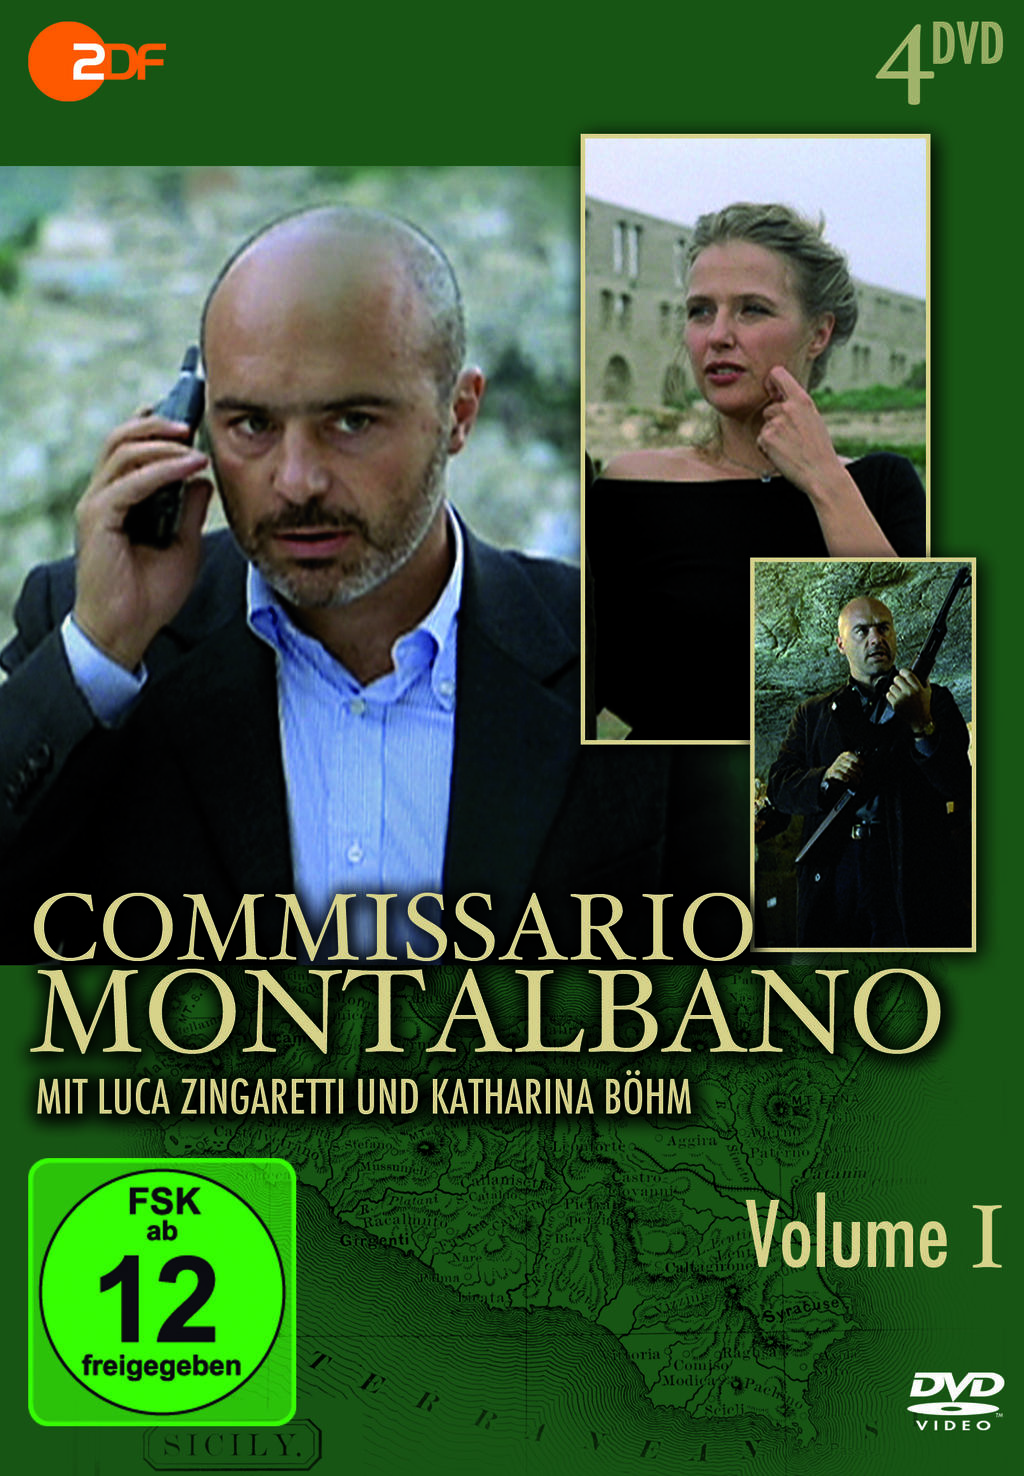 Commissario Montalbano: Gatto e cardellino | Season 4 | Episode 4